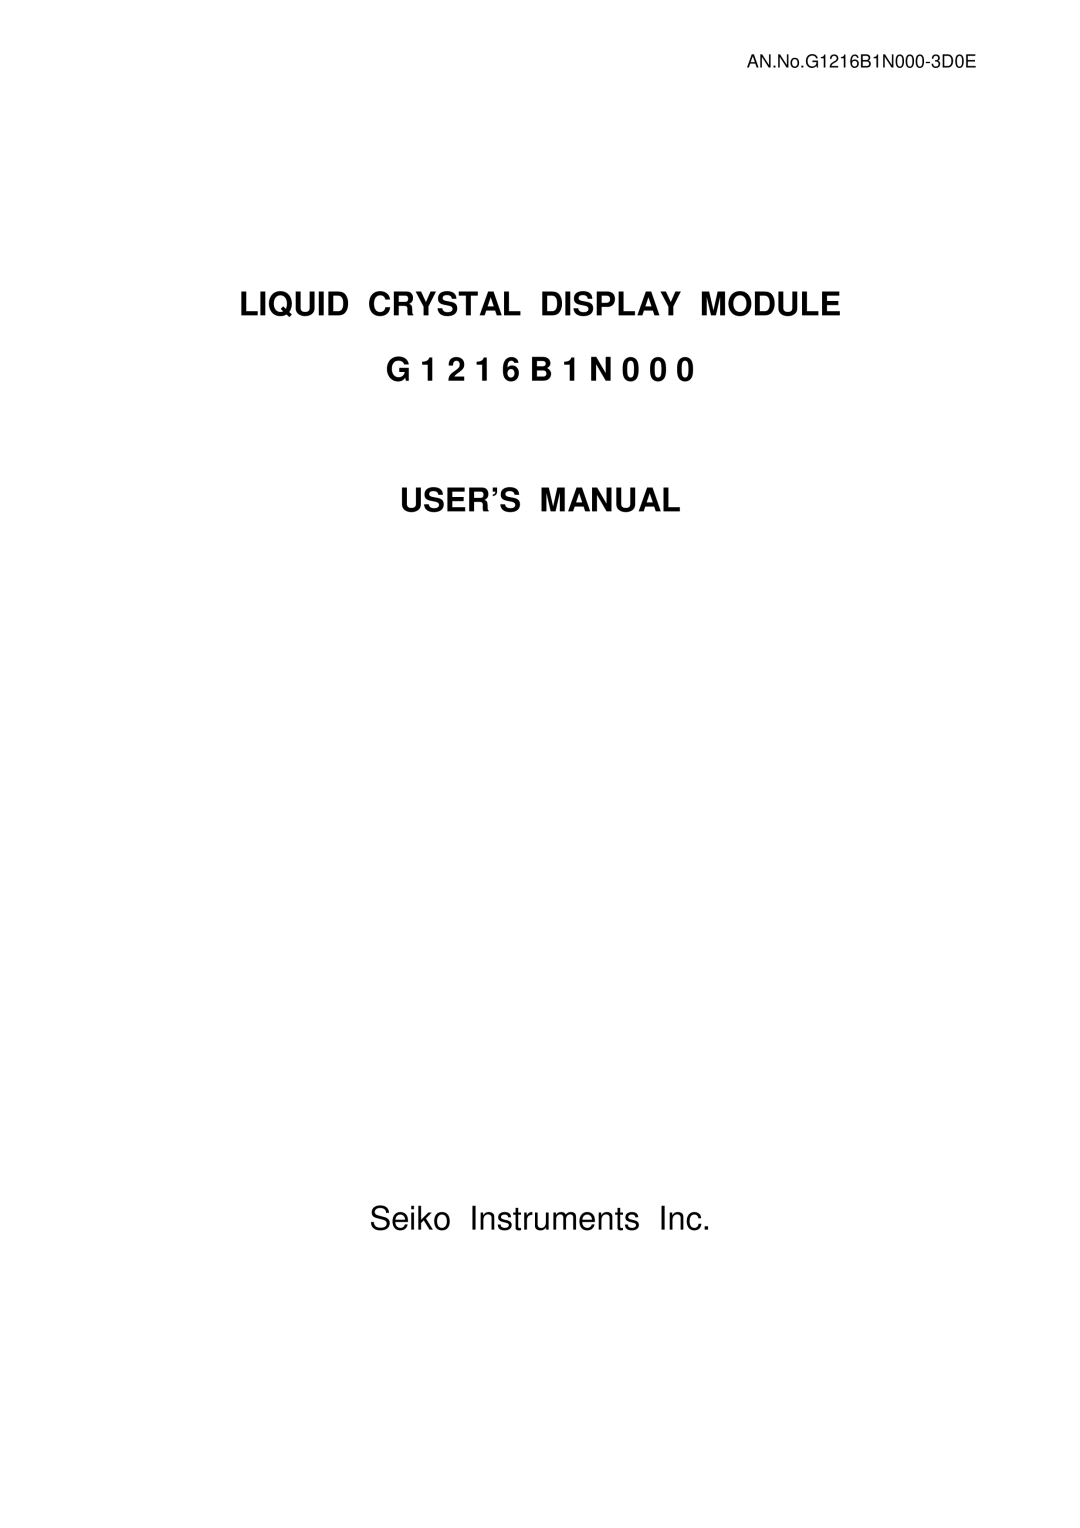 Seiko Instruments G1216B1N000 user manual LIQUID CRYSTAL DISPLAY MODULE G 1 2 1 6 B 1 N 0 0 USER’S MANUAL 